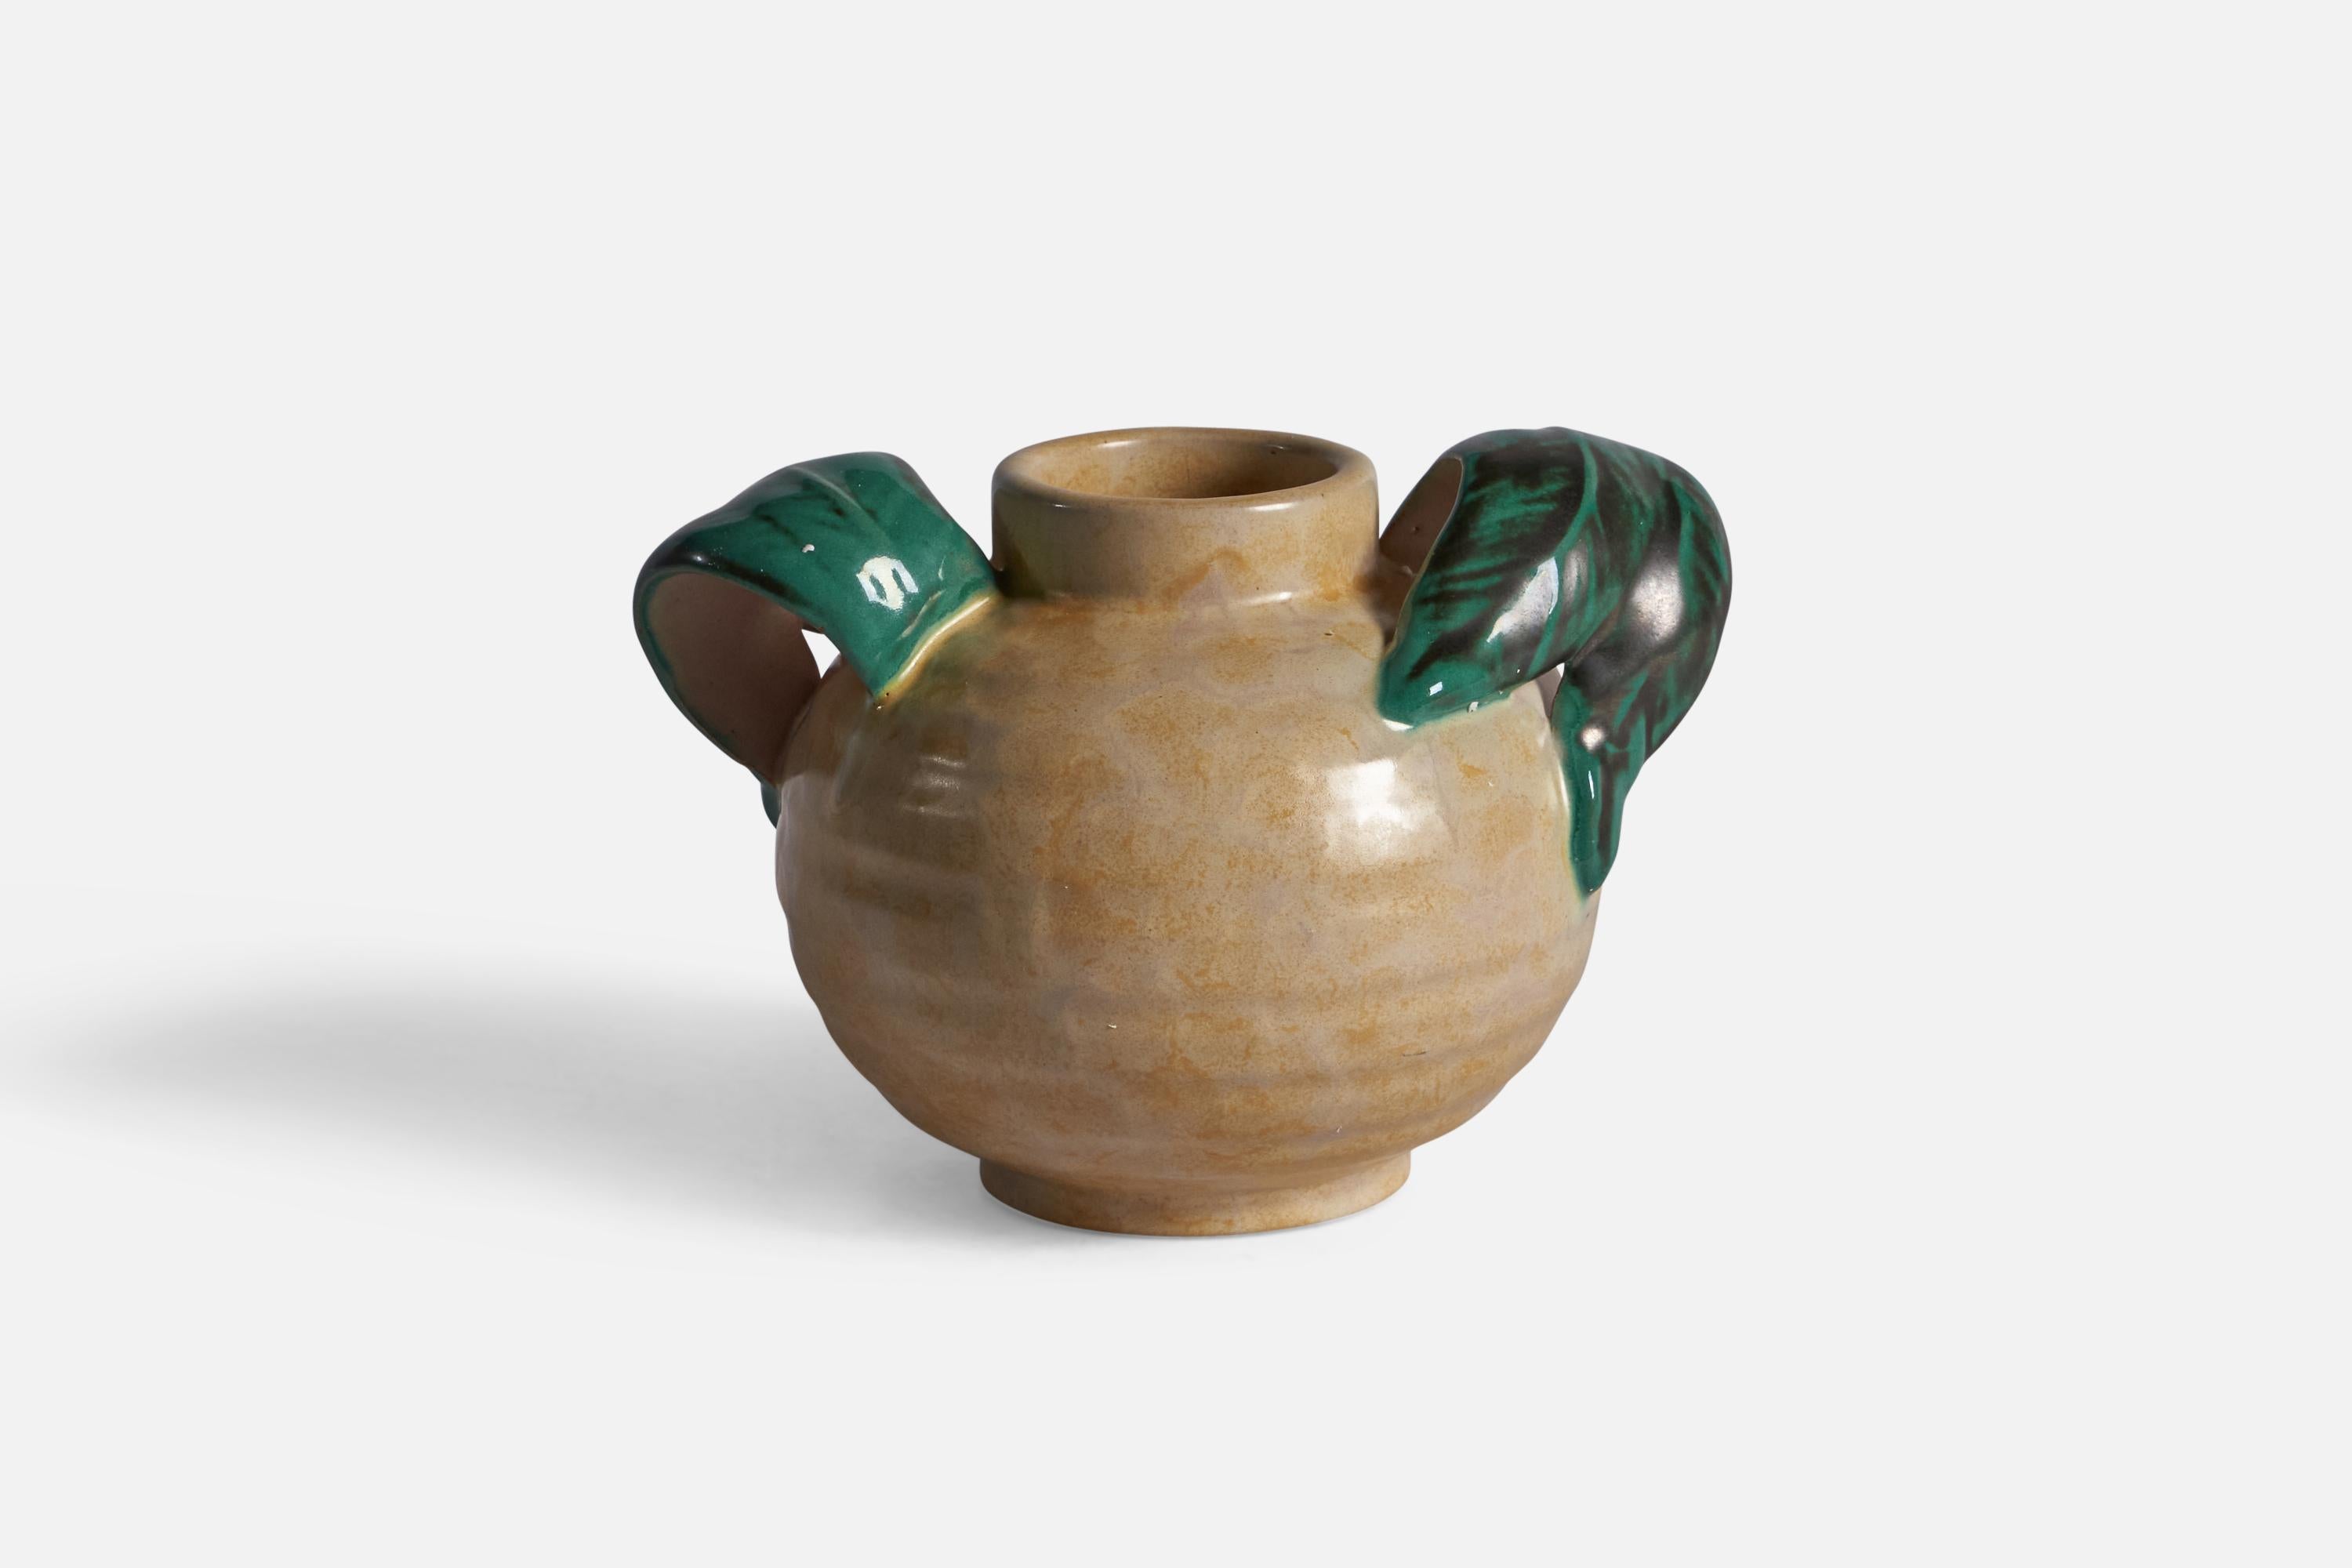 A green and beige-glazed earthenware vase, designed and produced by Upsala Ekeby, Sweden, c. 1930s.